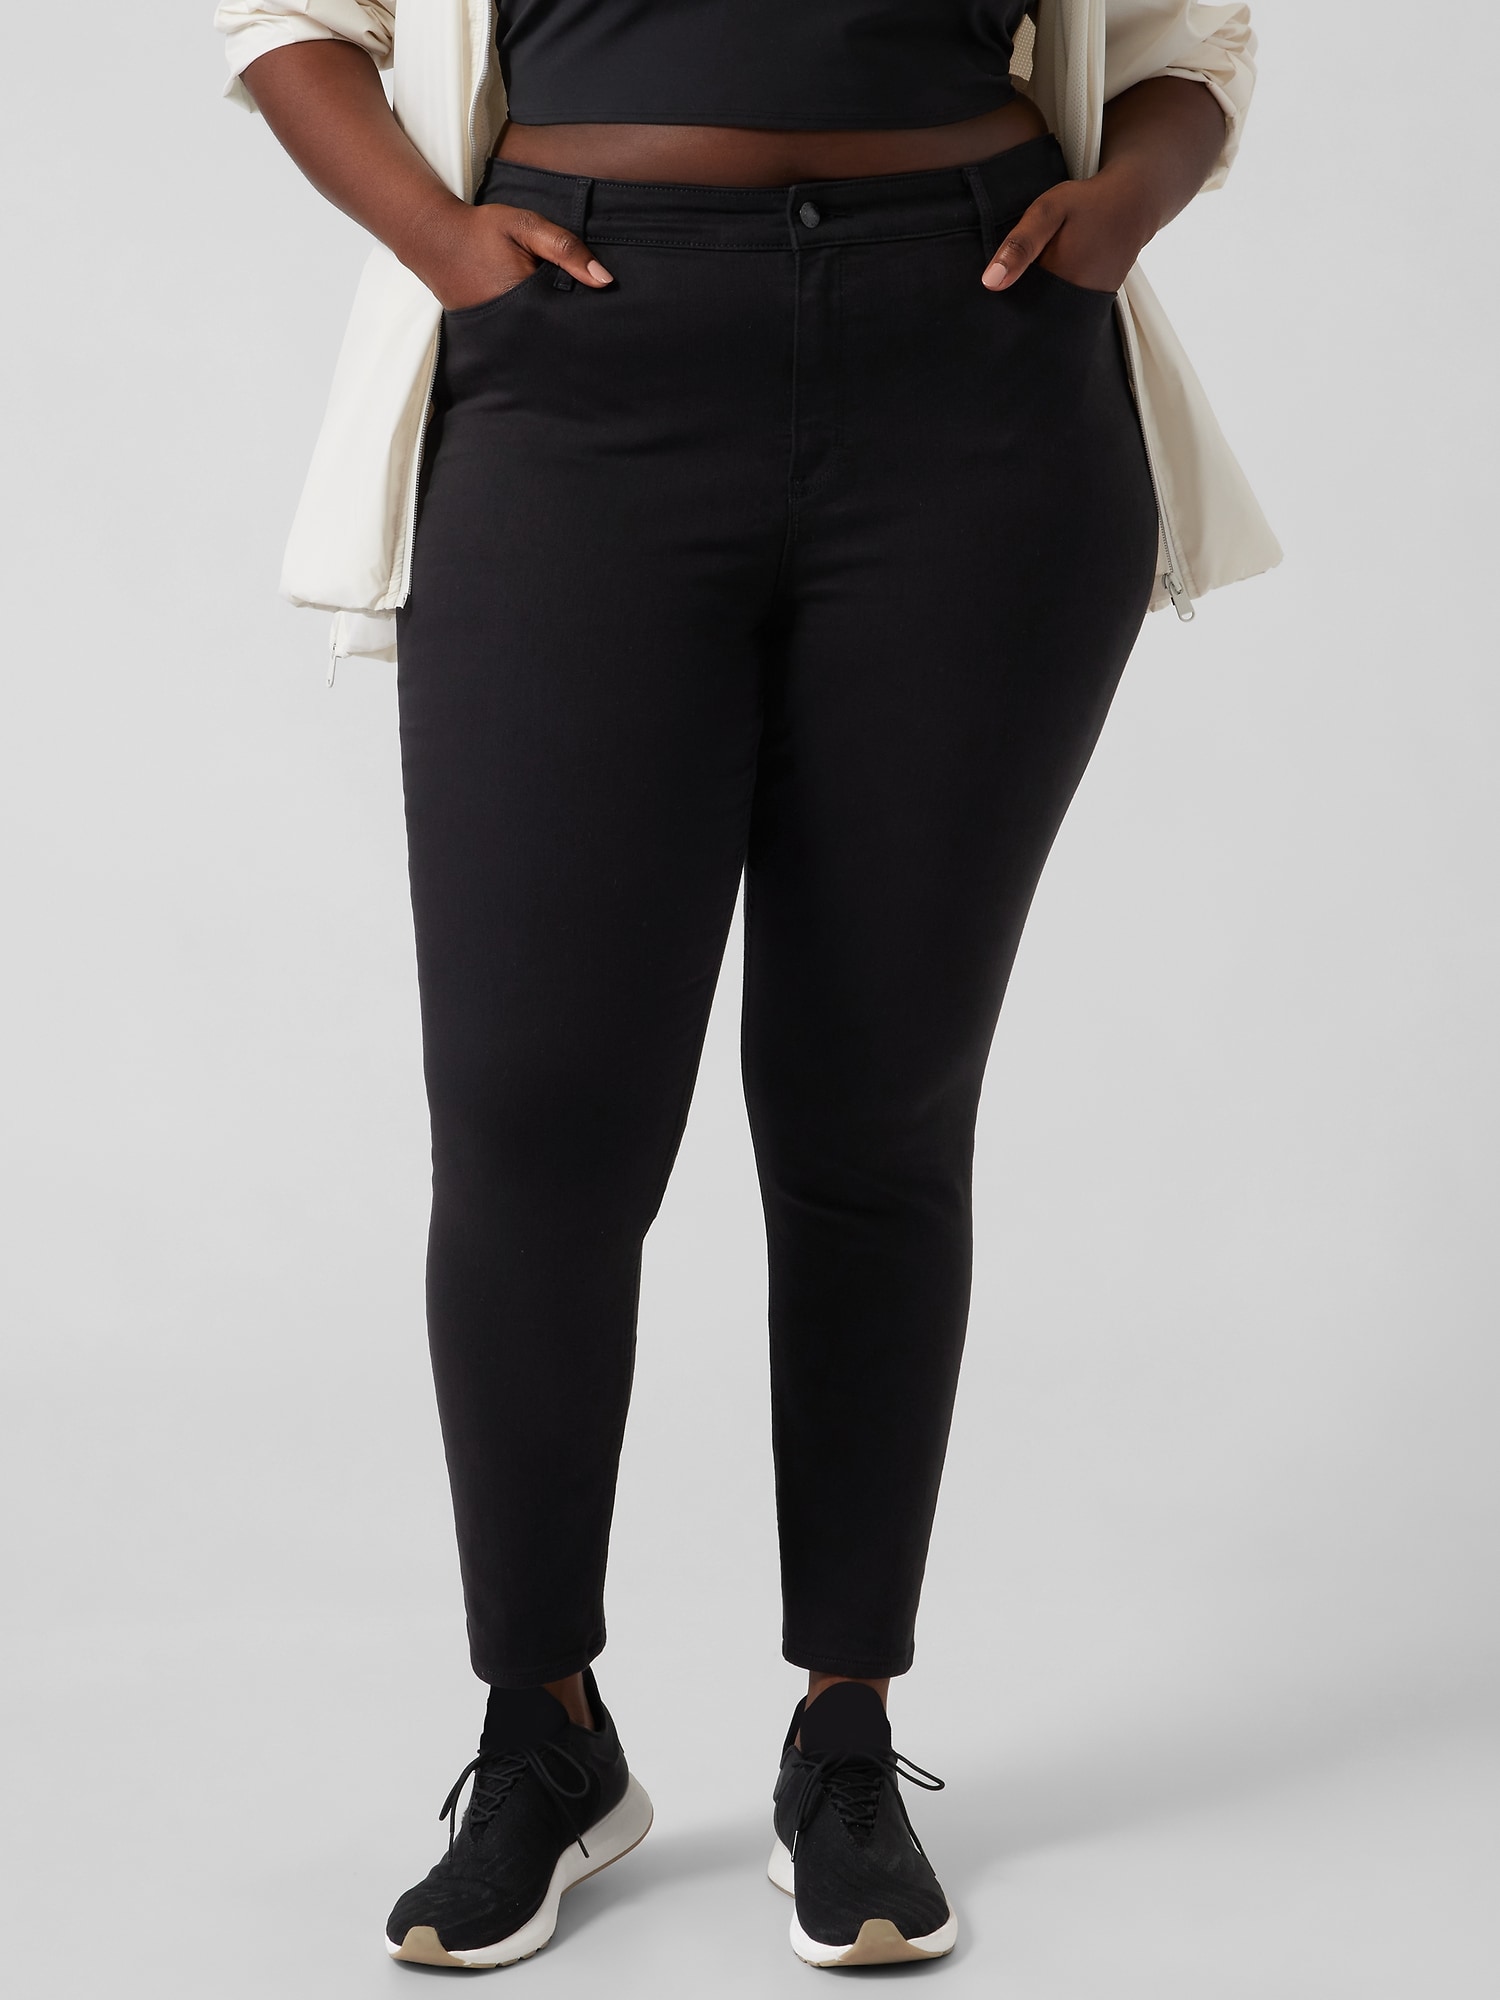 ATHLETA FLATIRON TUX TIGHT BLACK YOGA Pants #35373-00 Size Medium Petite